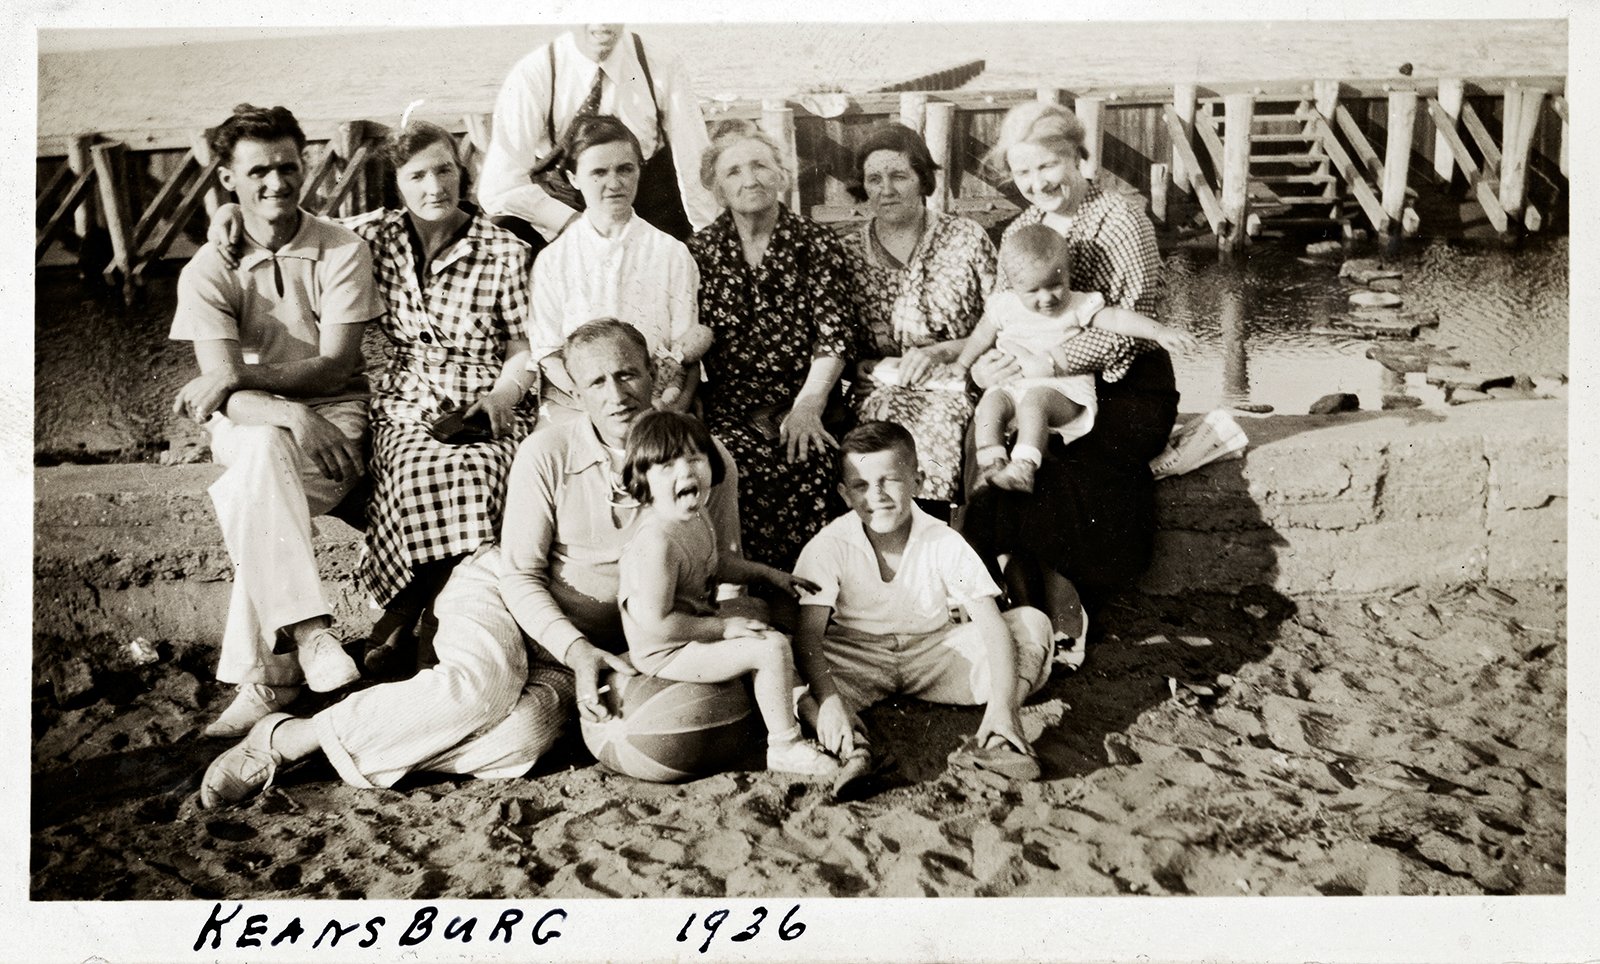 Keansburg Beach, New Jersey, 1936.